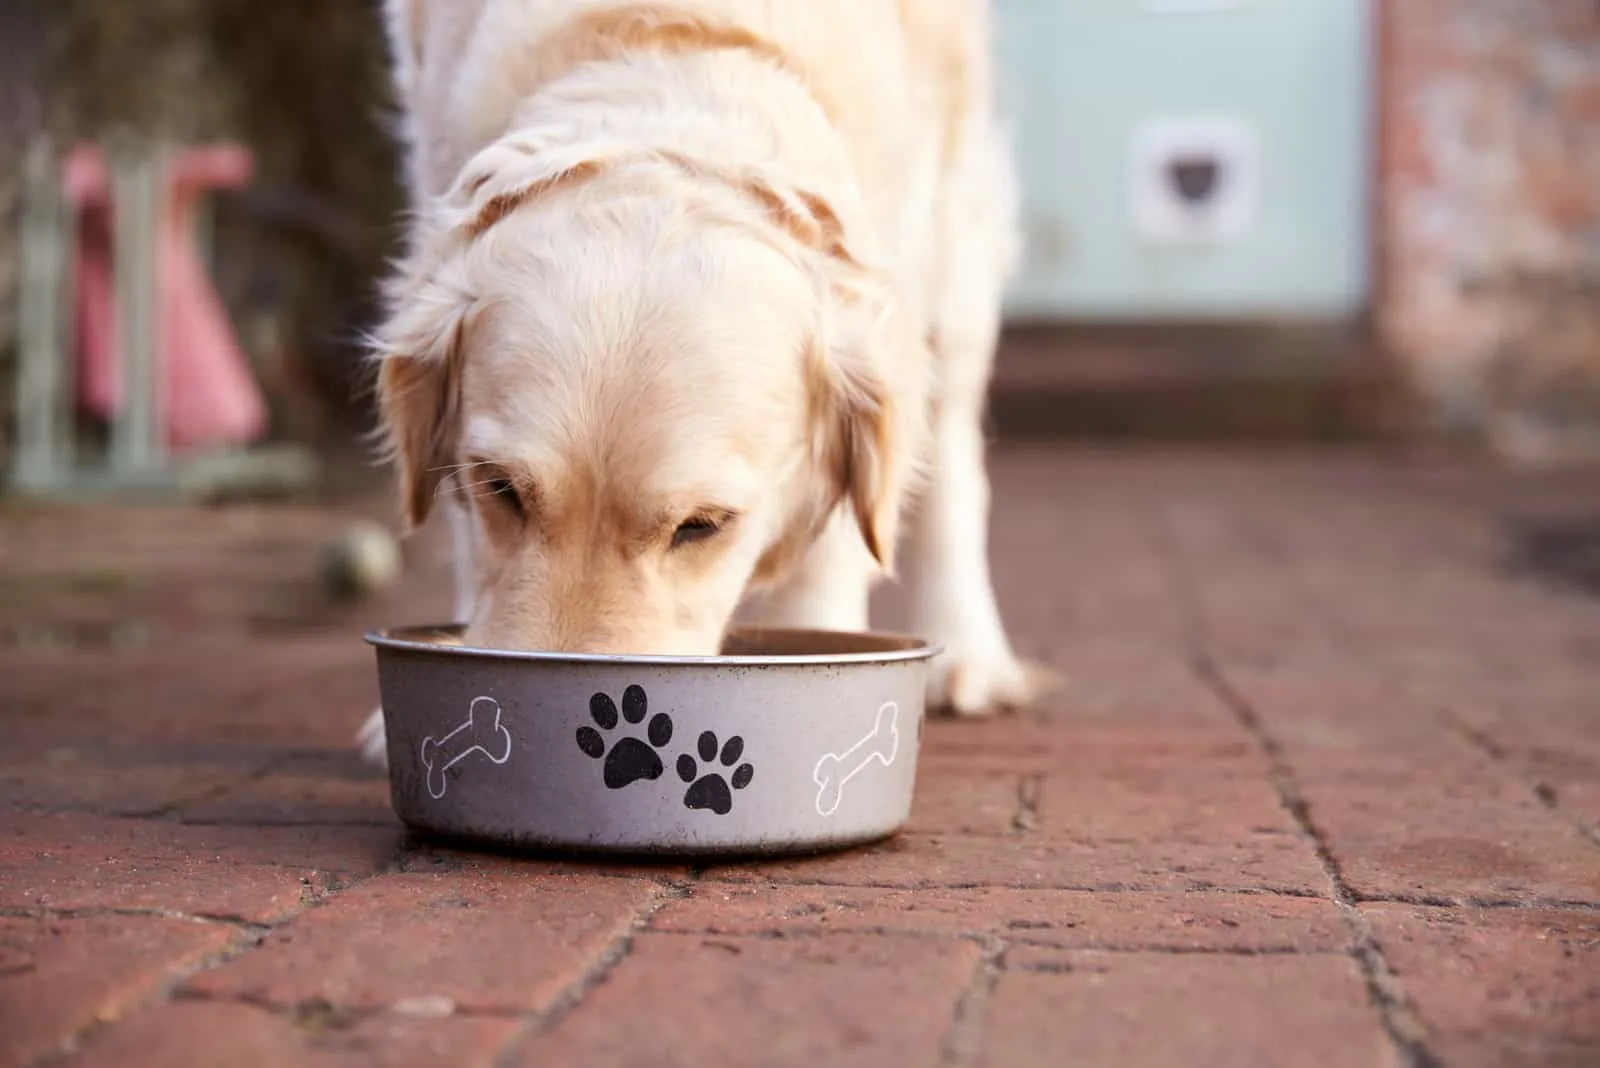 Dog eats from dog bowl